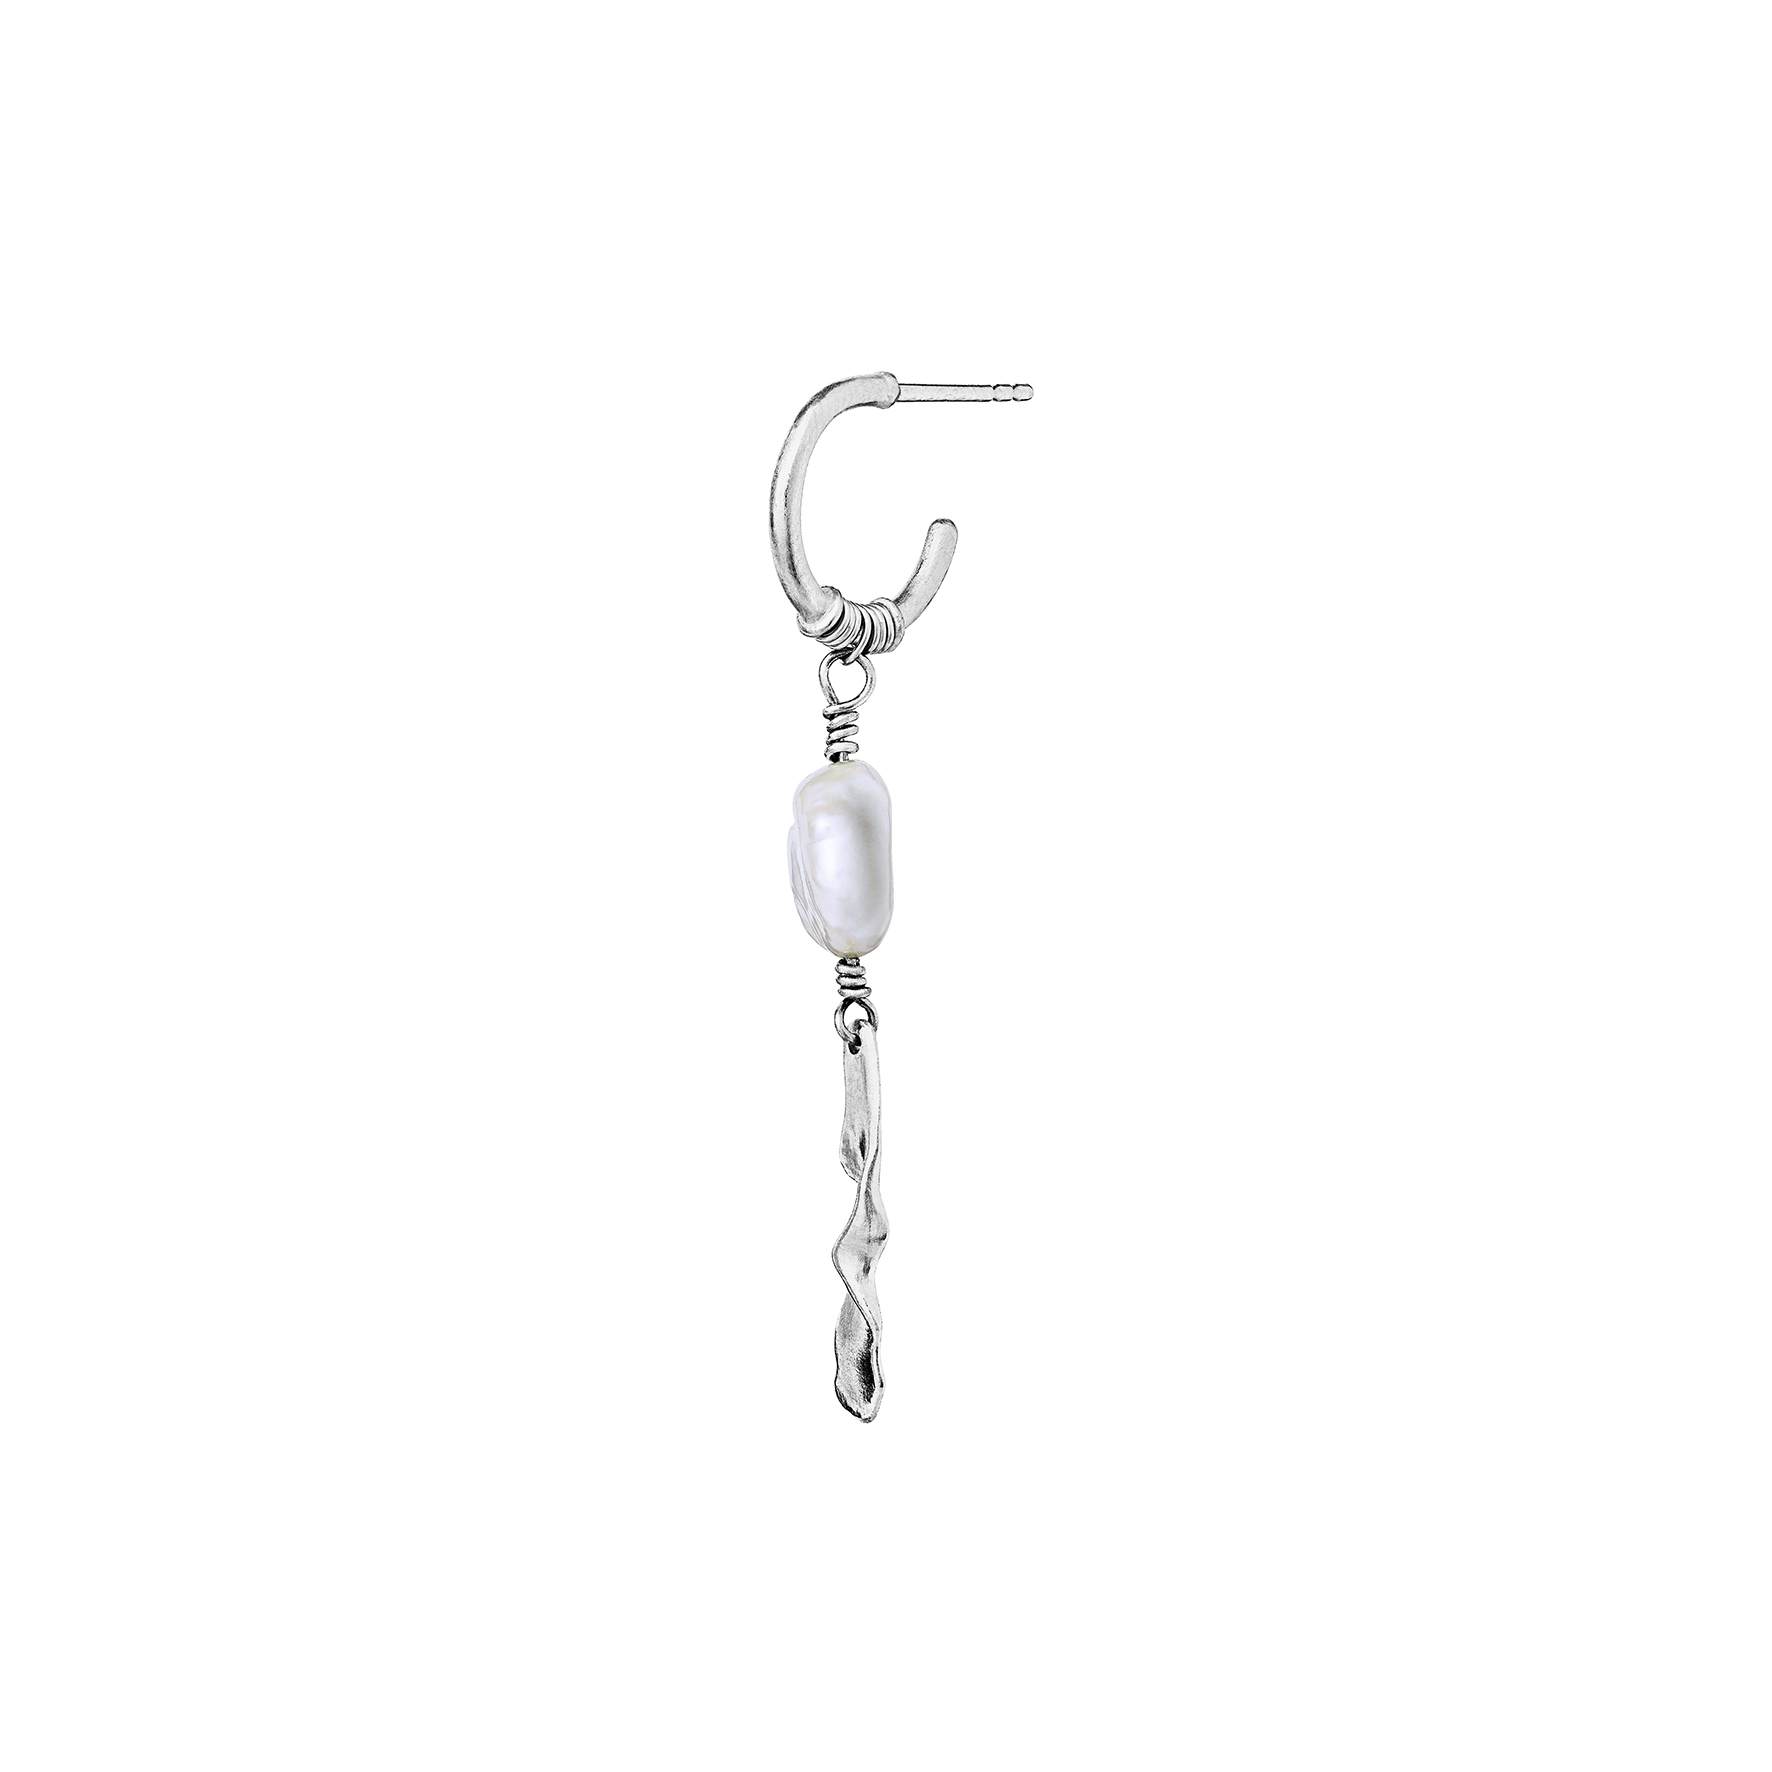 Alfie Earring von Maanesten in Silber Sterling 925|Freshwater Pearl